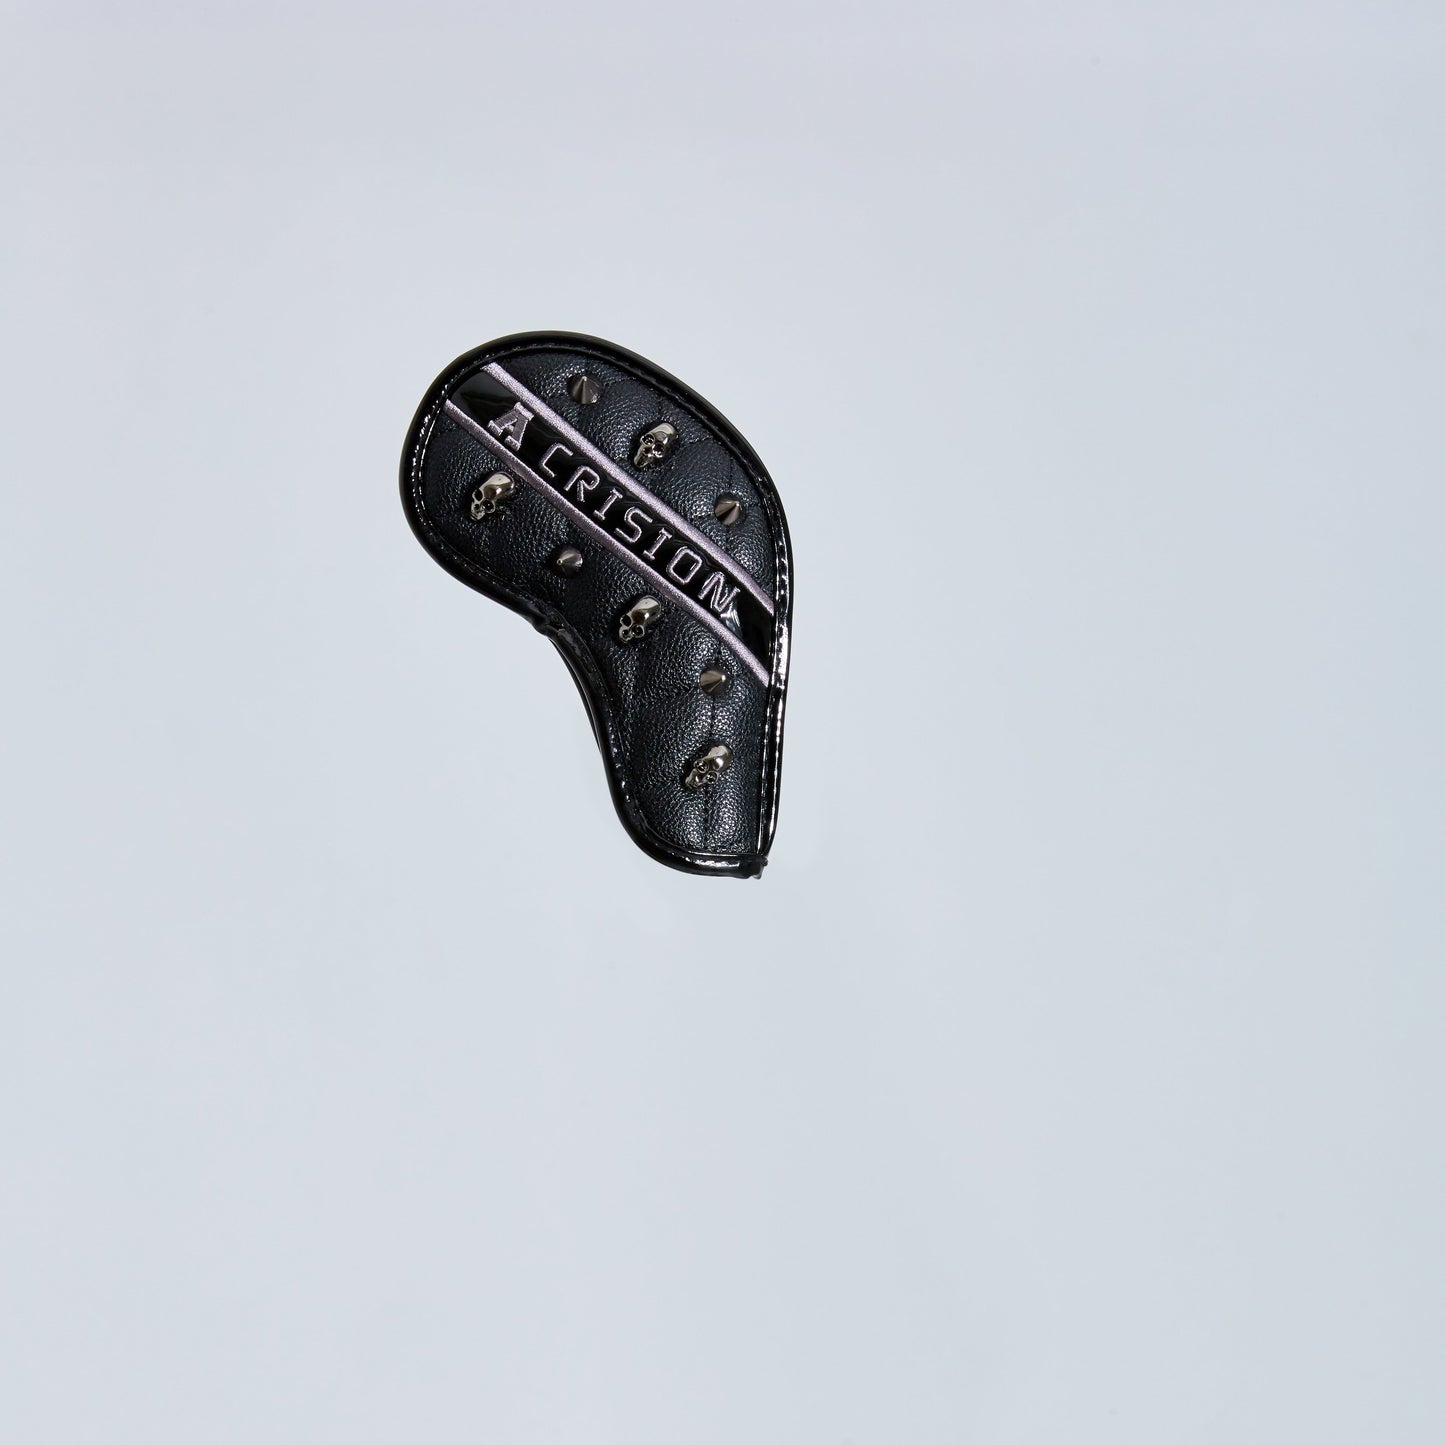 Verabone Iron Headcover by Nevermindall USA